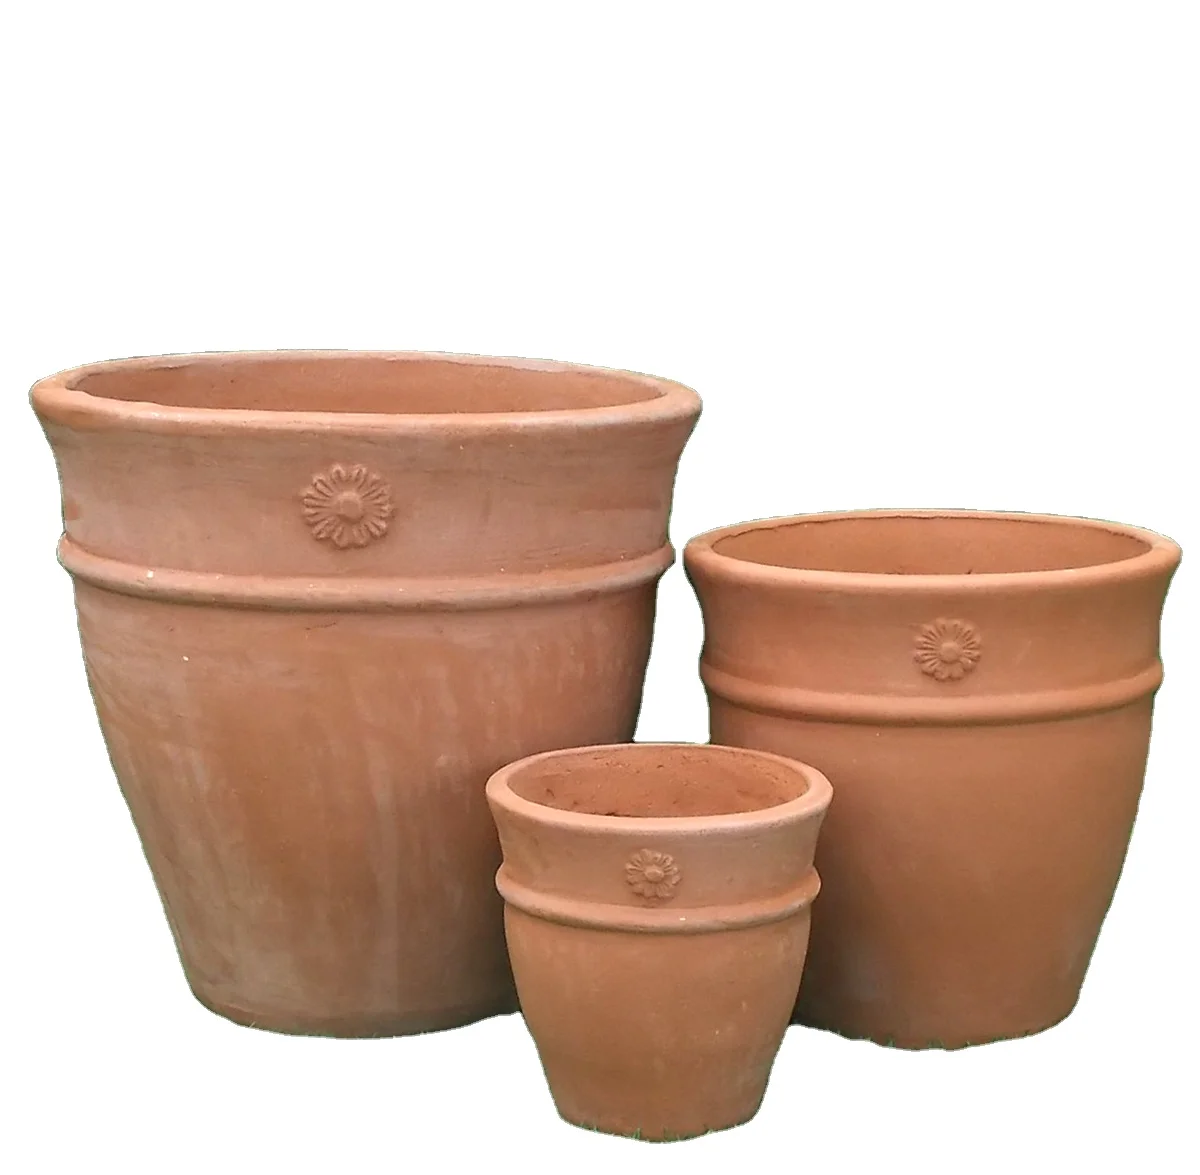 Terracotta Ceramic Flower Pot Live Design Clay Garden Planter for Outdoor & Home Nursery & Floor Usage Garden Decoration